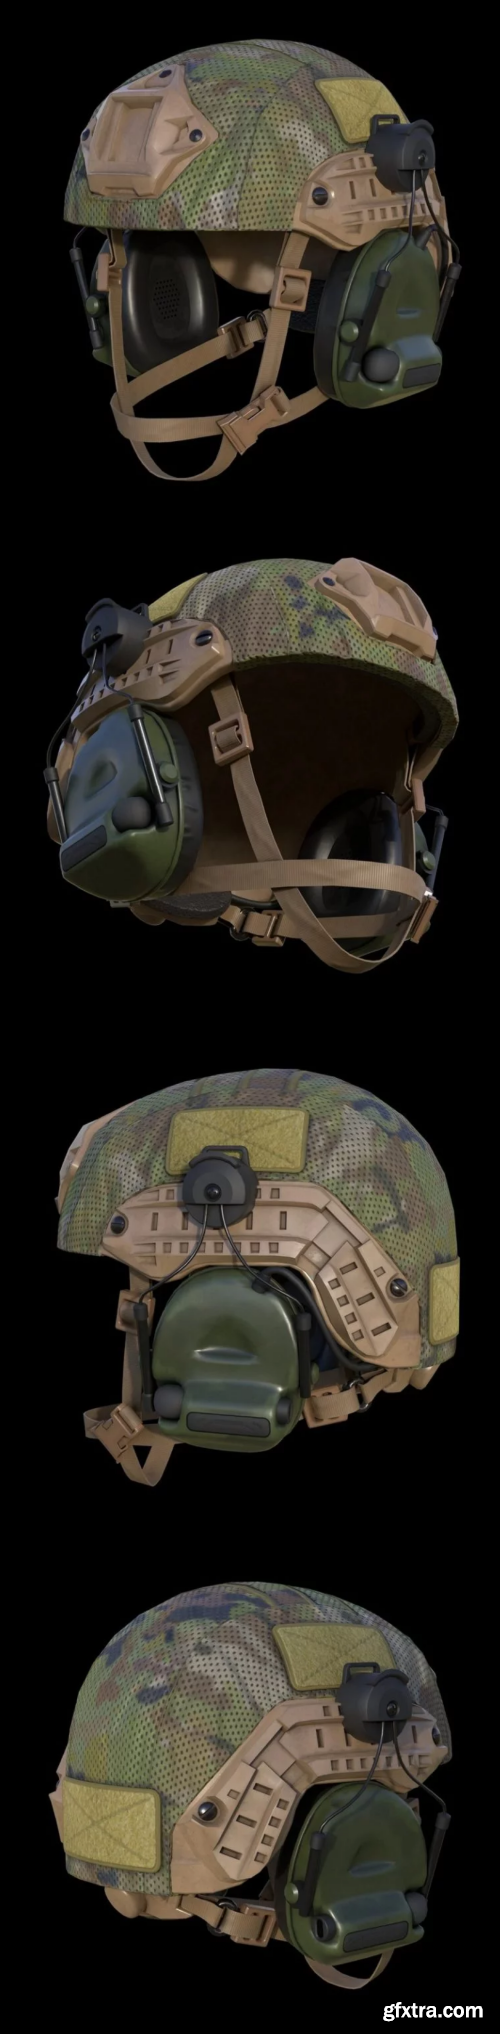 Advanced Combat Helmet with Headphones